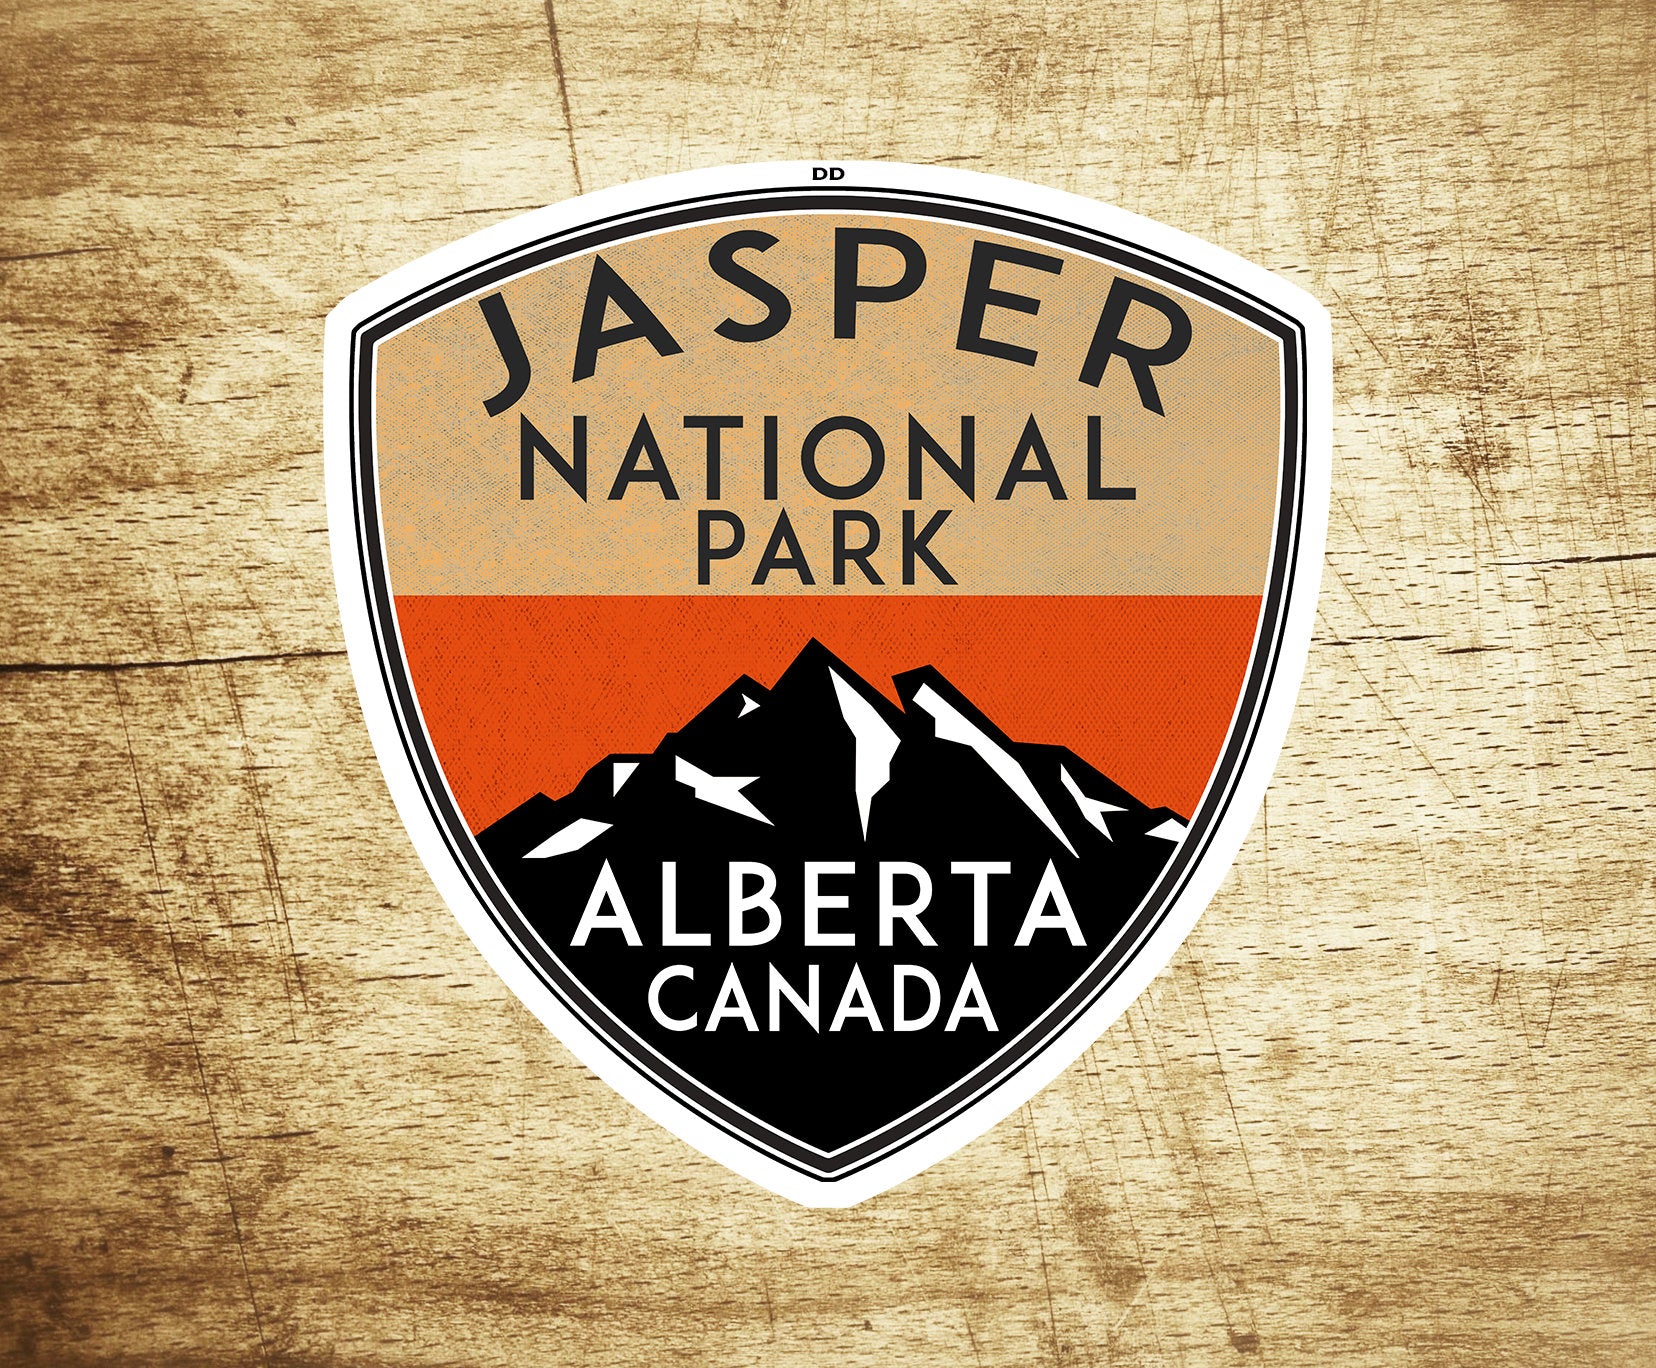 Jasper National Park Alberta Canada Sticker Decal 3"